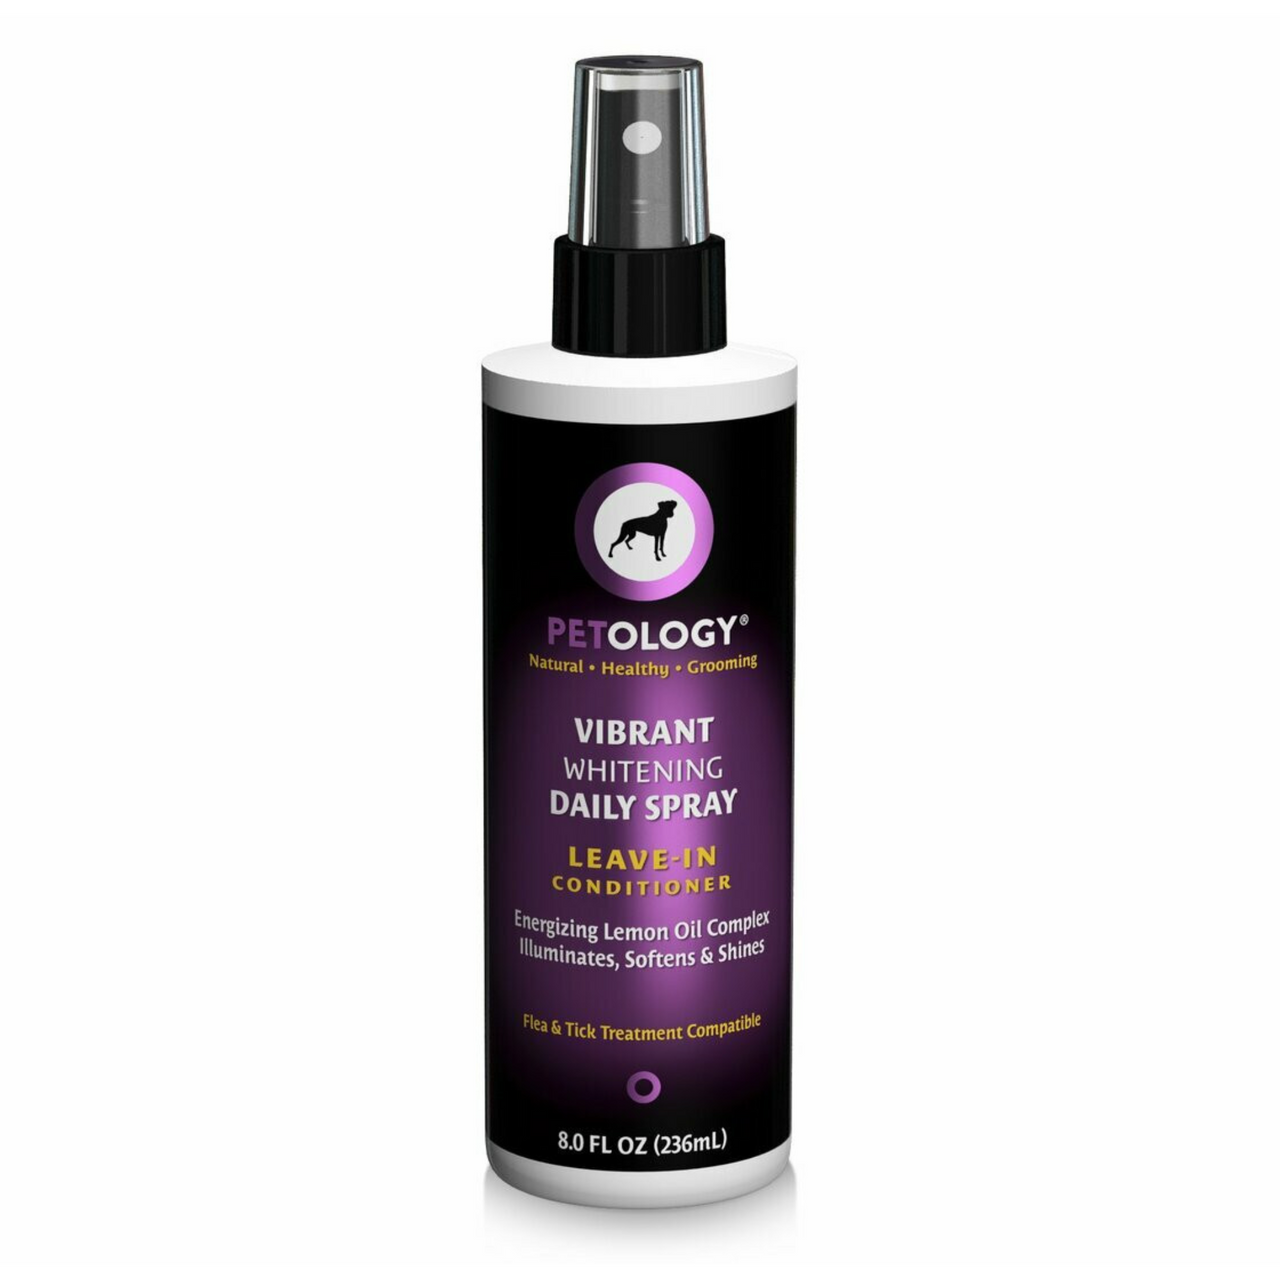 Dog Odor-Off Spray (8 oz) - Pet Wish Pros